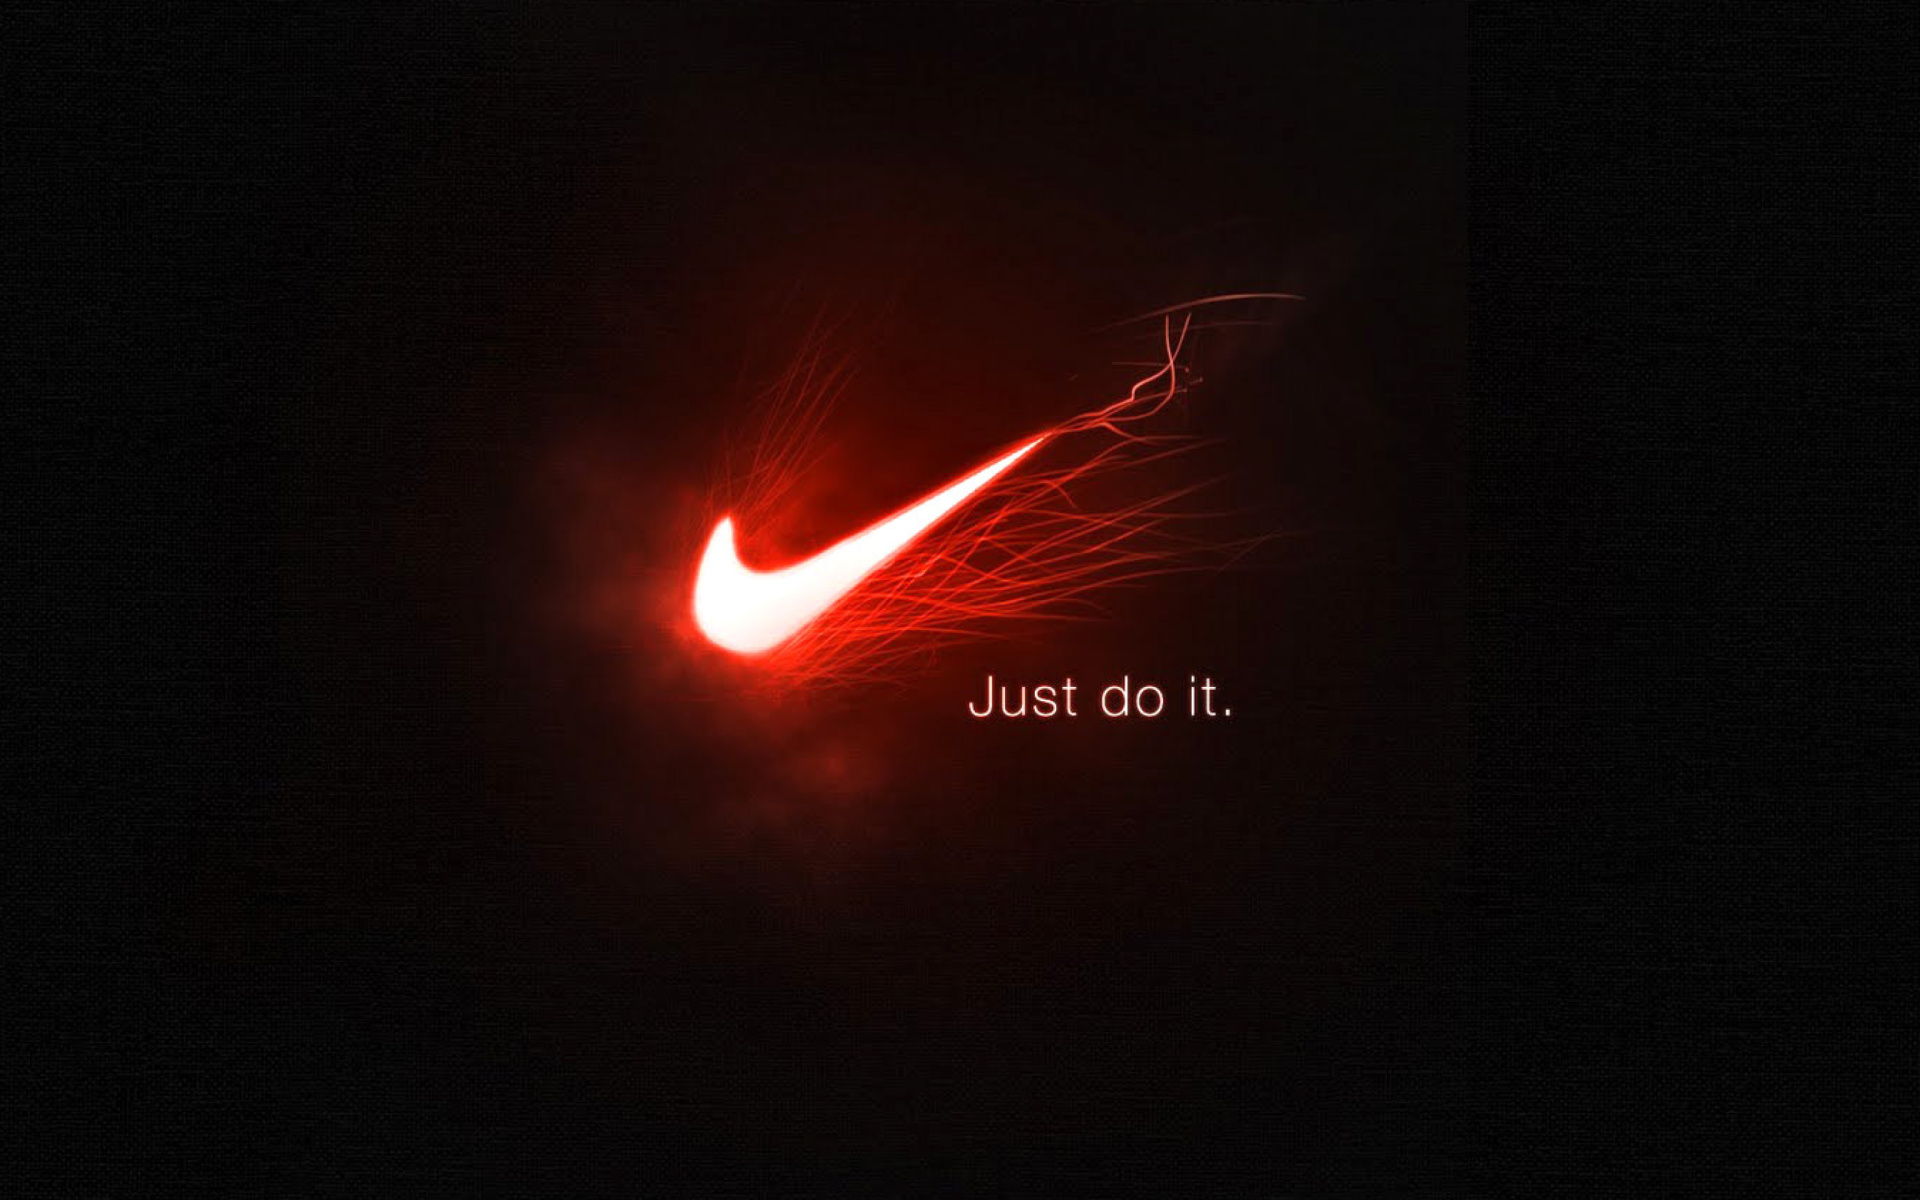 Nike Advertising Slogan Just Do It wallpaper 1920x1200